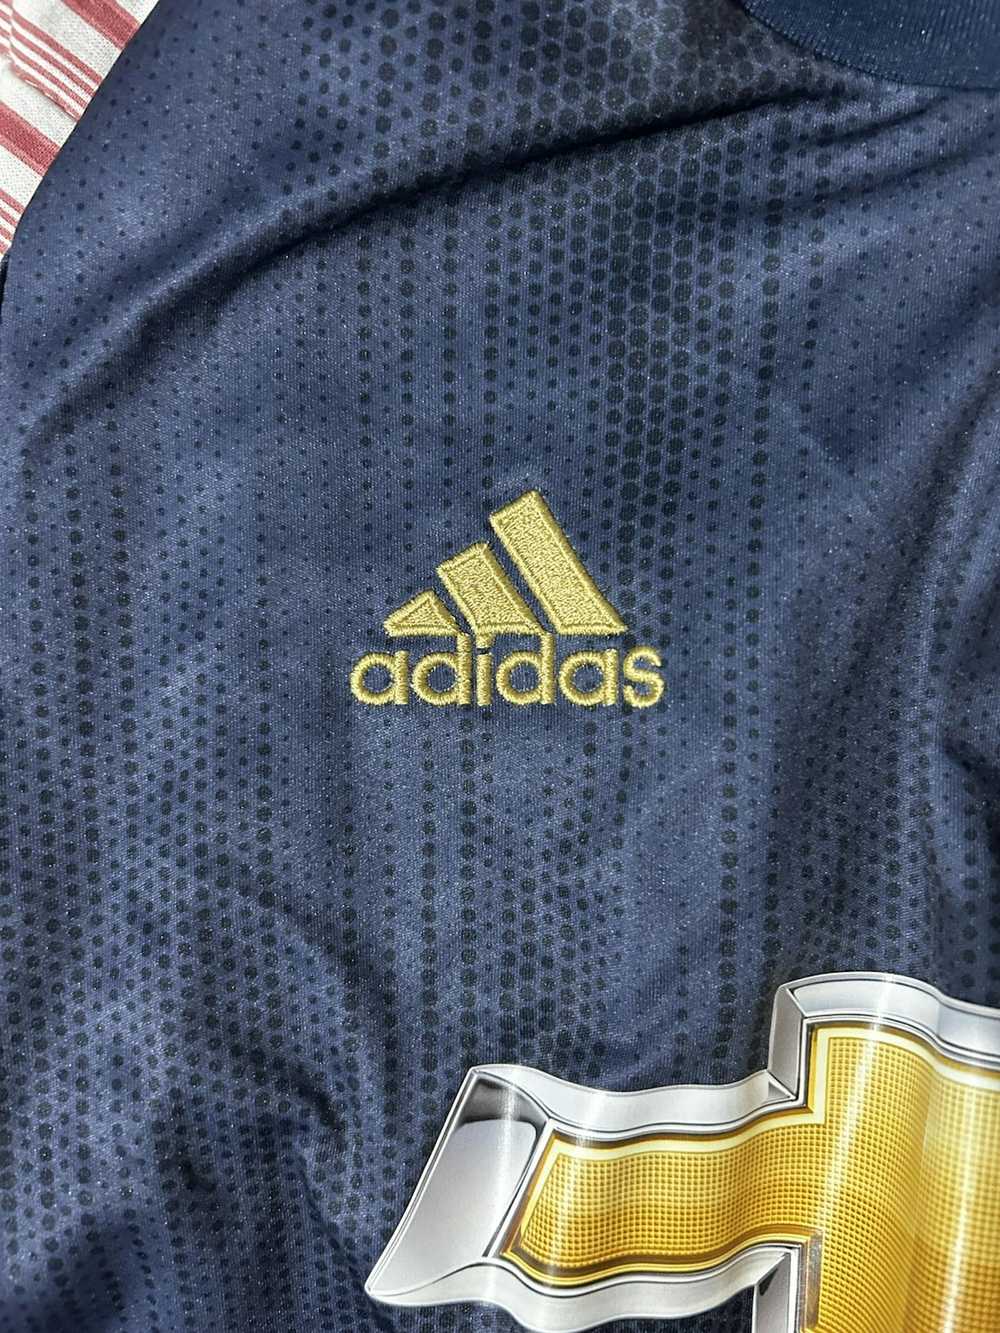 Adidas Manchester United Jersey - image 5